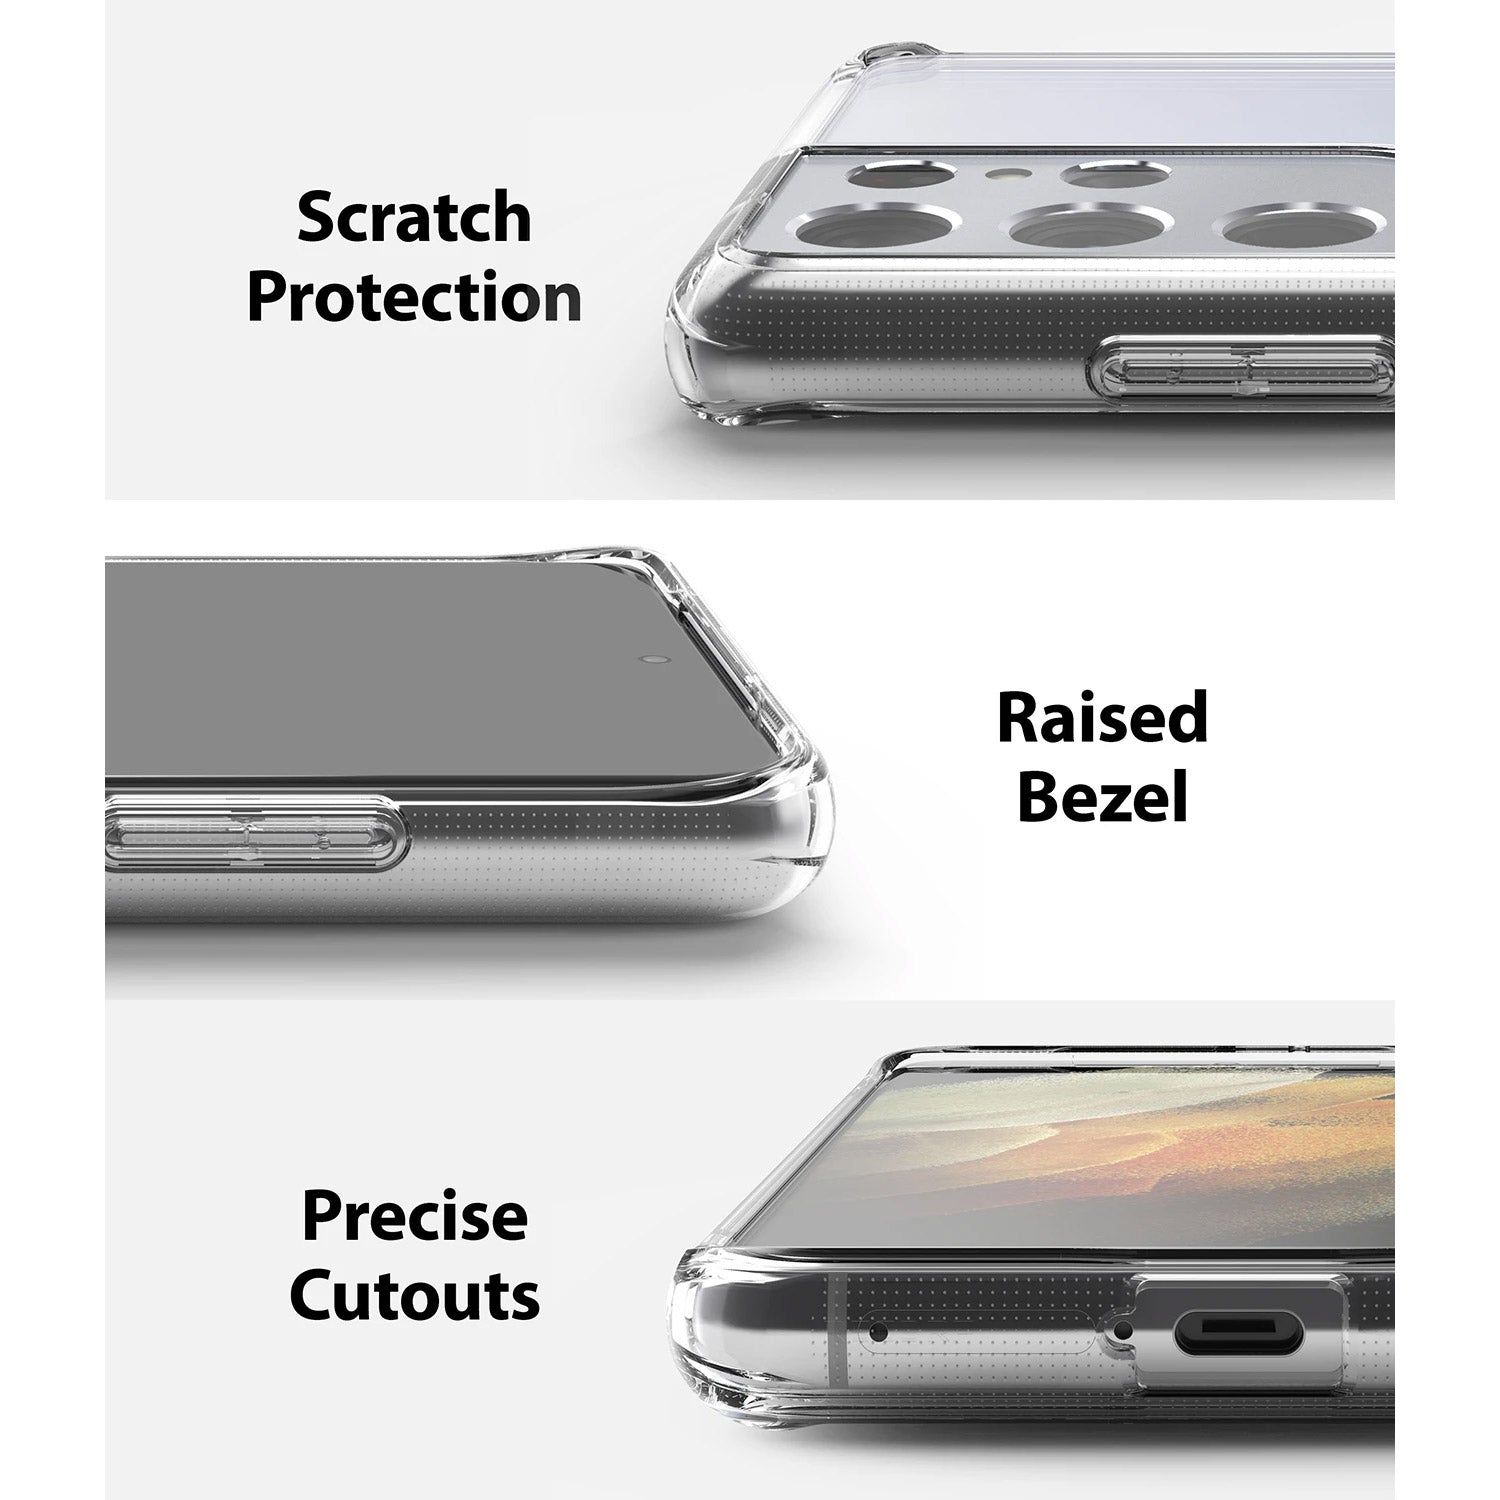 Ringke Samsung Galaxy S21 Ultra 5G Case Fusion Clear